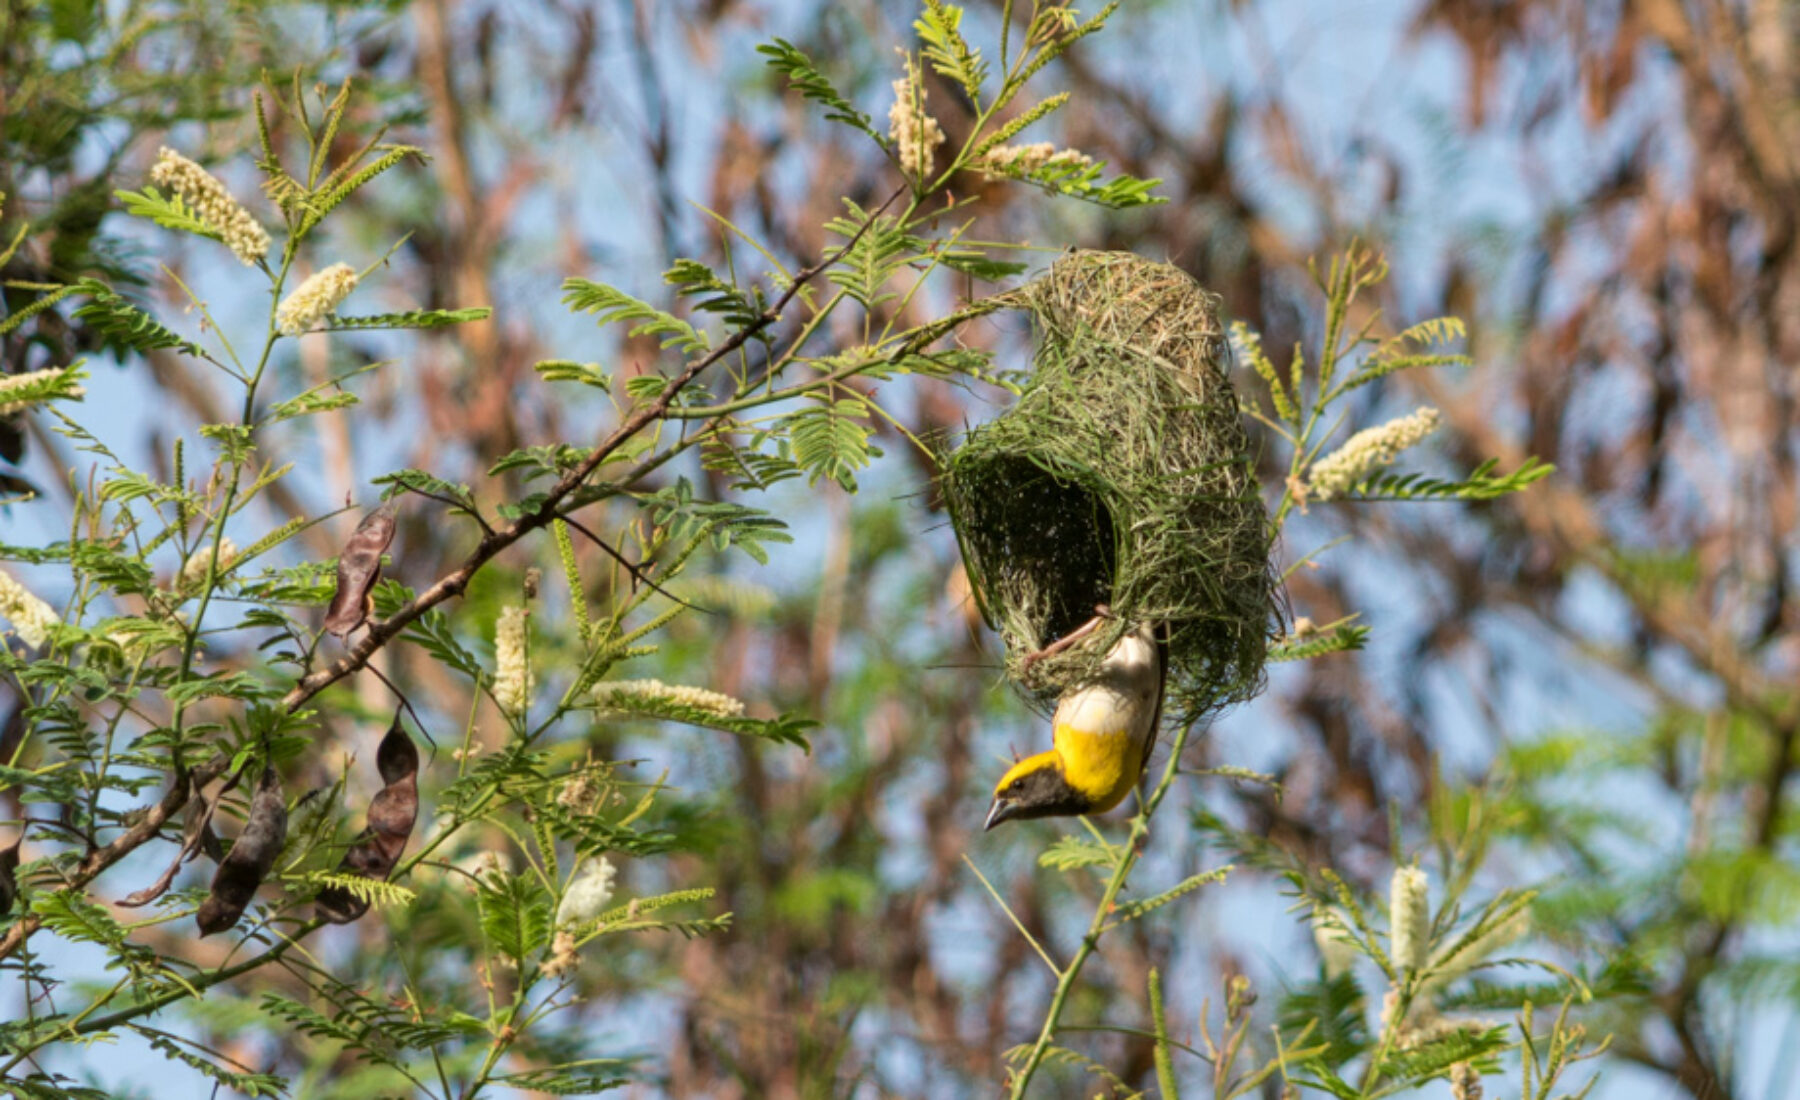 2016-06-16 Weaver birds building their nest